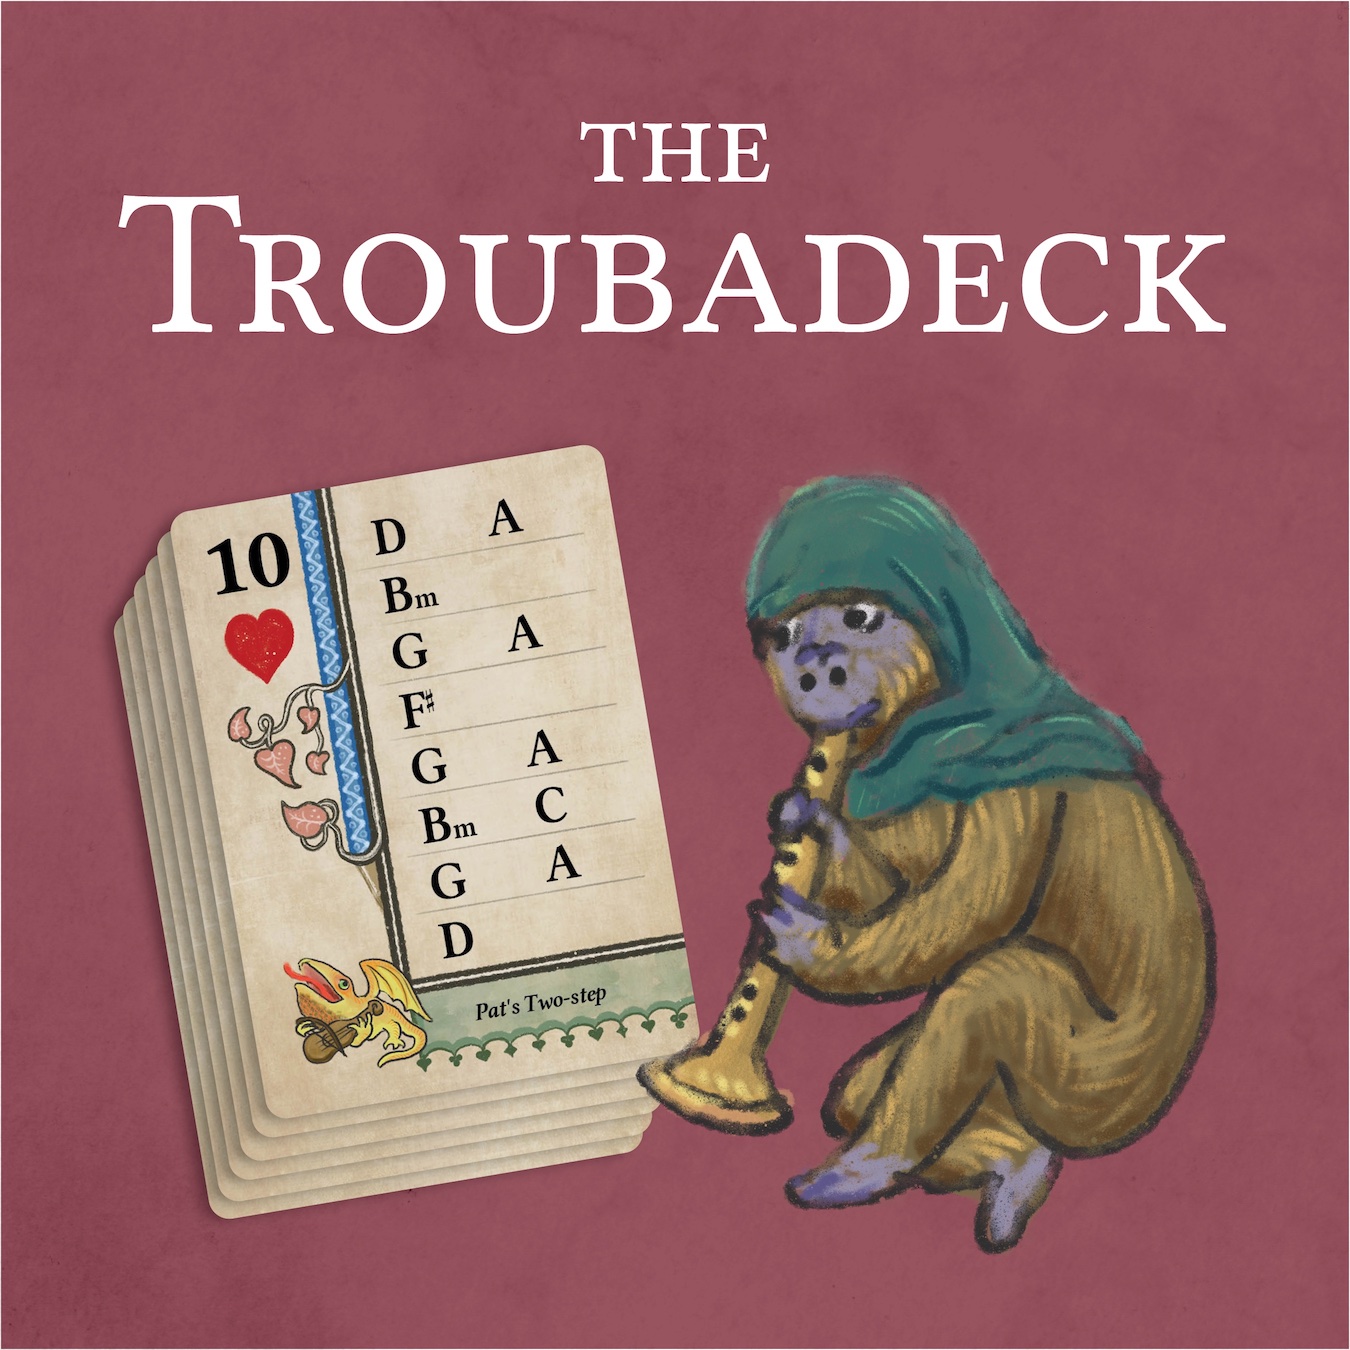 The Troubadeck